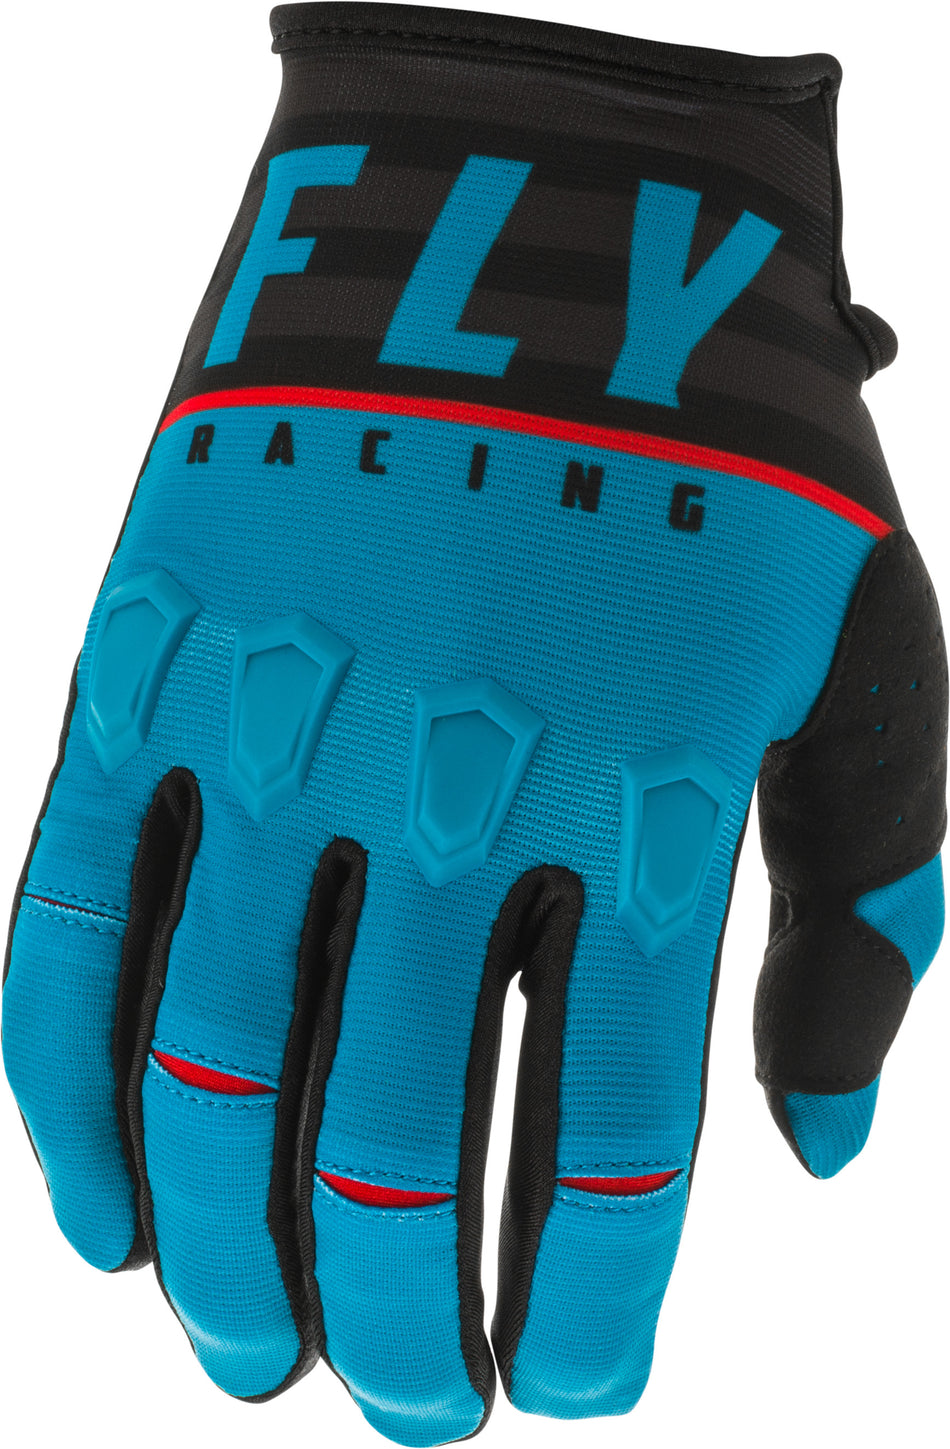 FLY RACING Kinetic K120 Gloves Blue/Black/Red Sz 08 373-41908